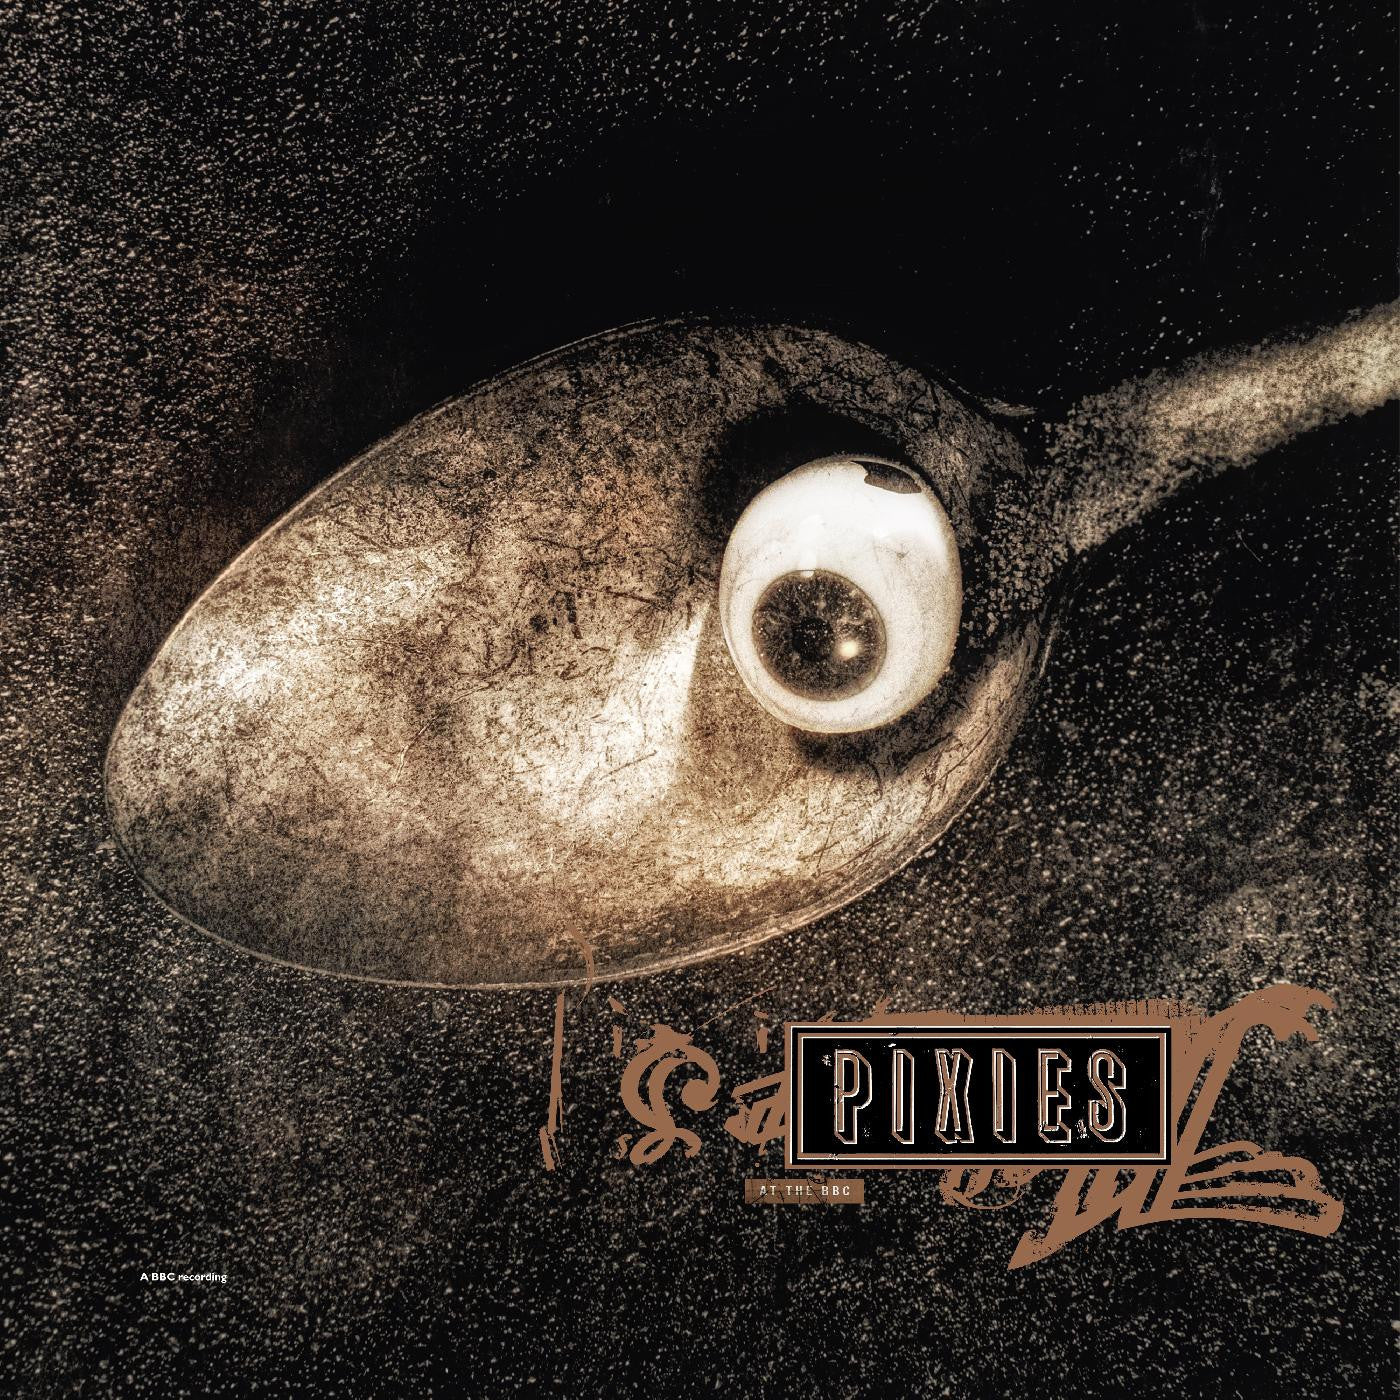 Pixies - Pixies at the BBC [3-lp]